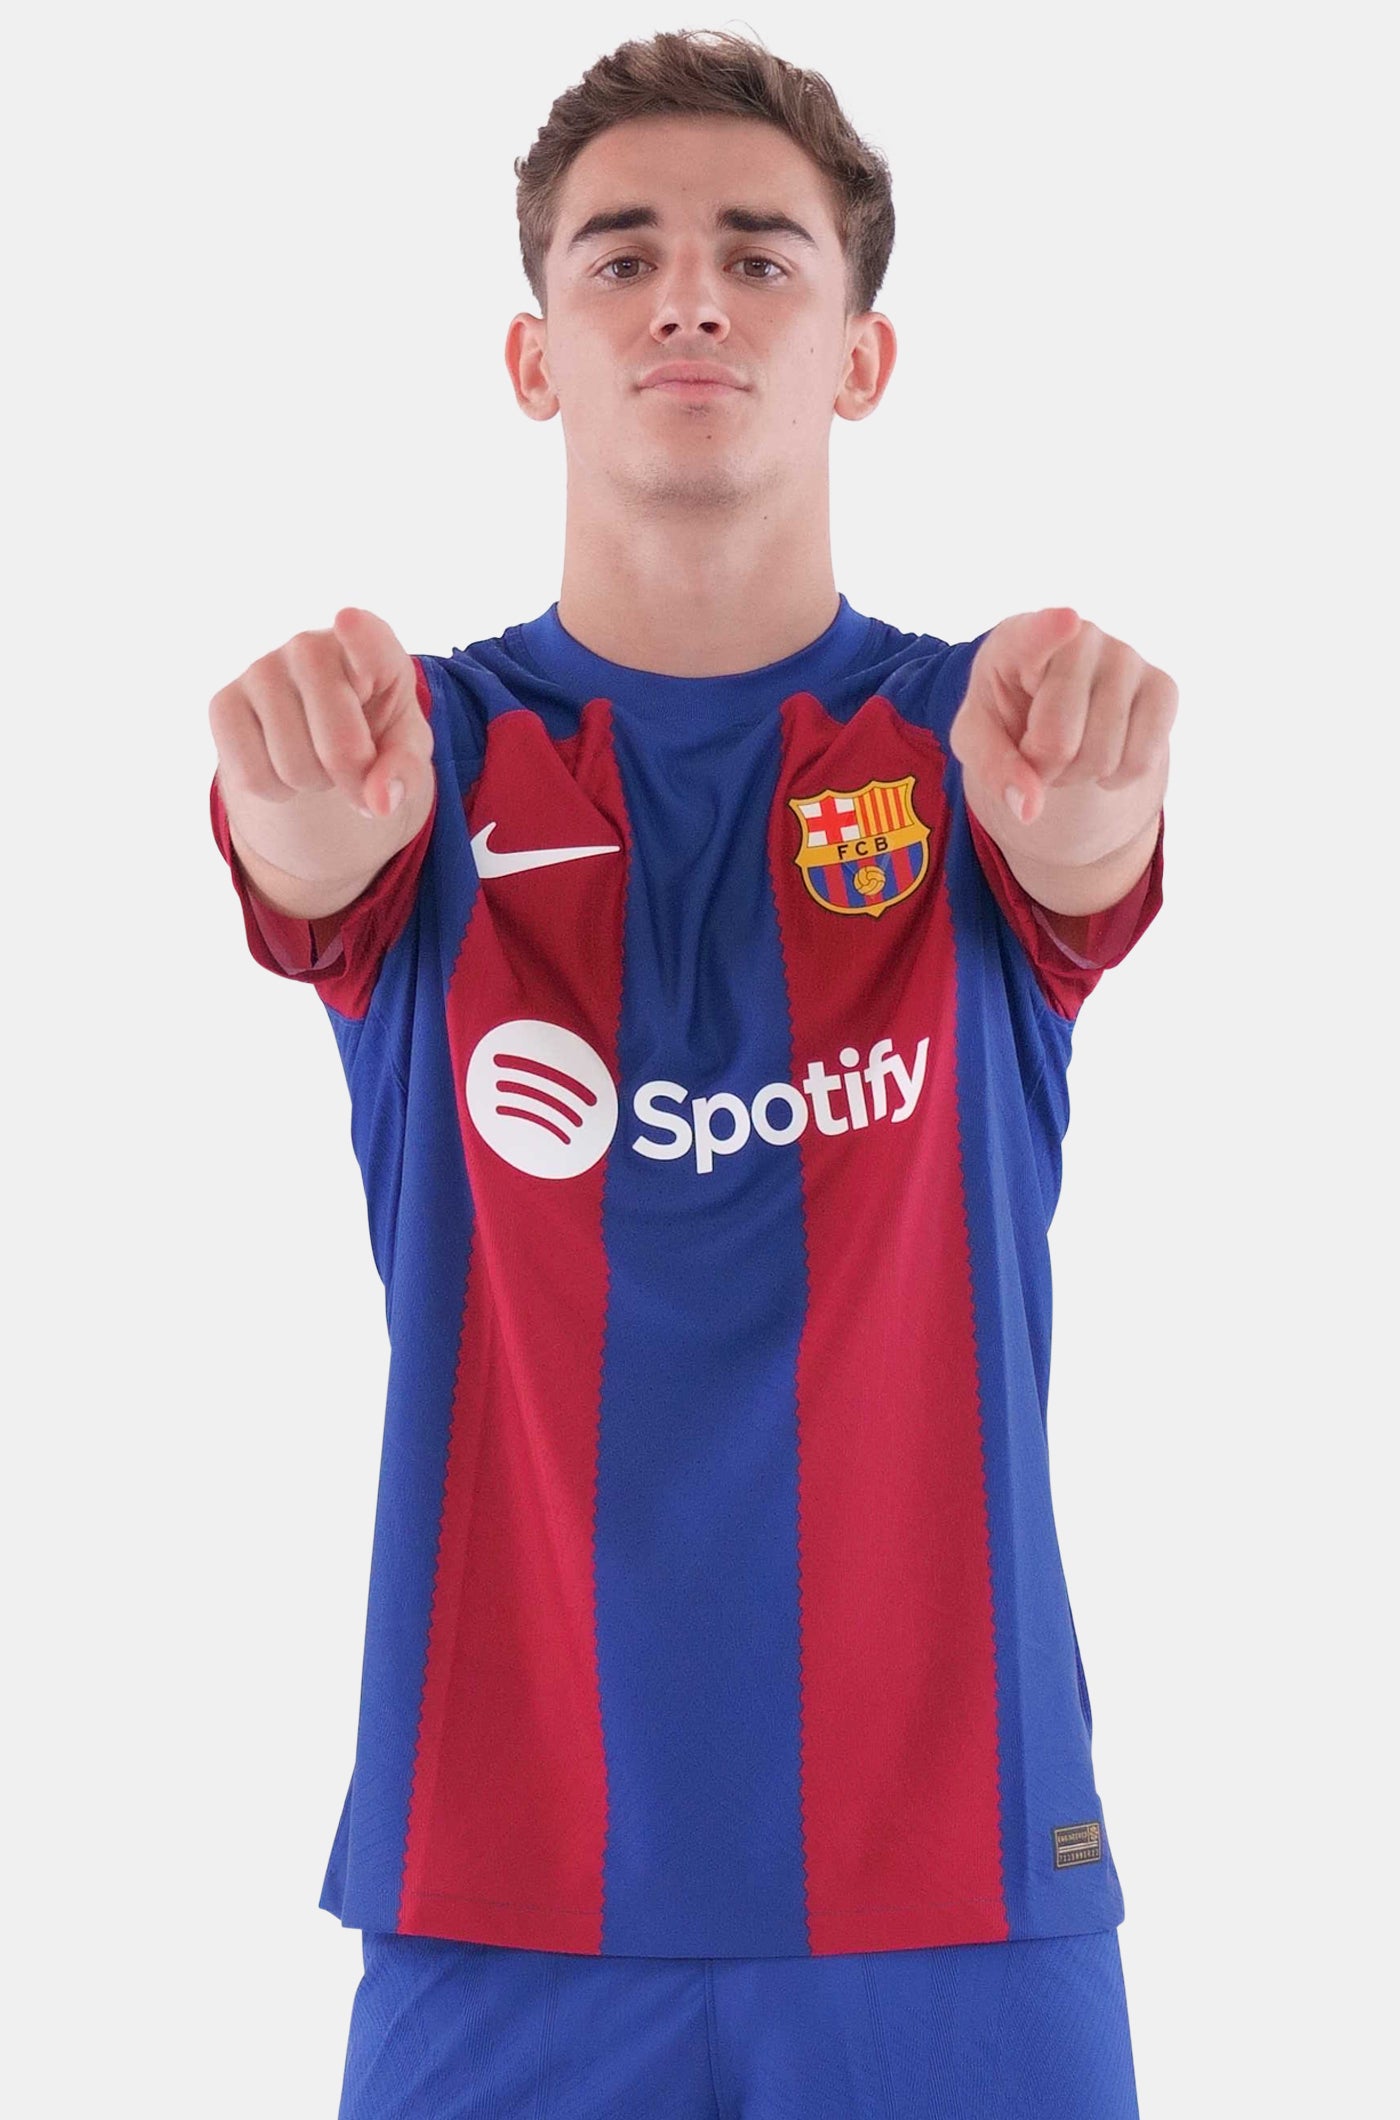 UCL FC Barcelona home shirt 23/24 Player's Edition  - GAVI